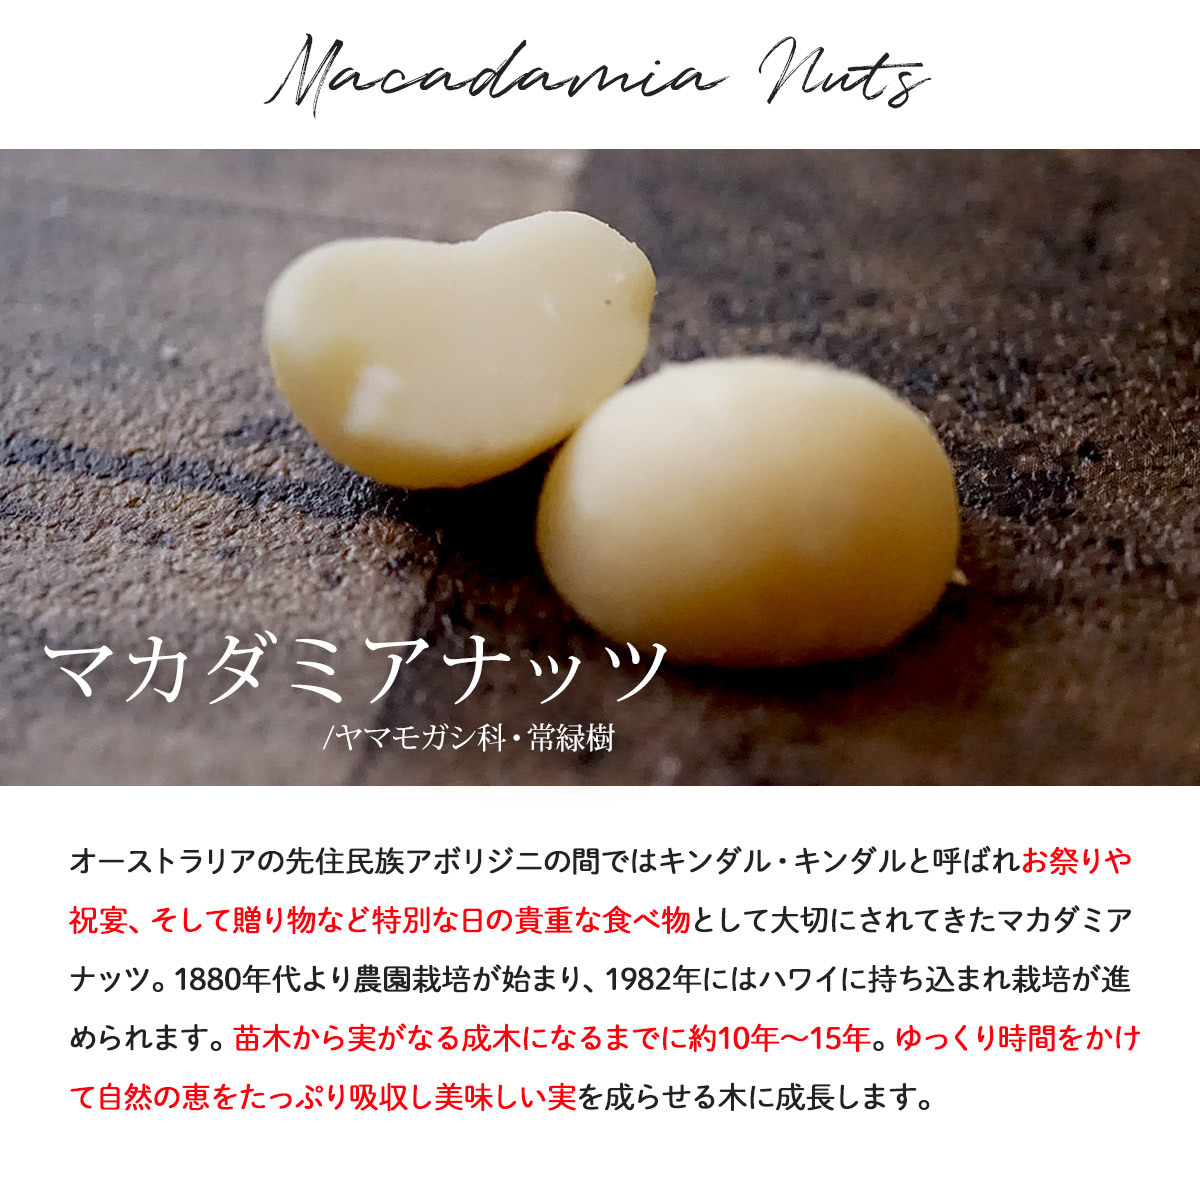  unglazed pottery . macadamia nuts 40g salt free less oil no addition roast to